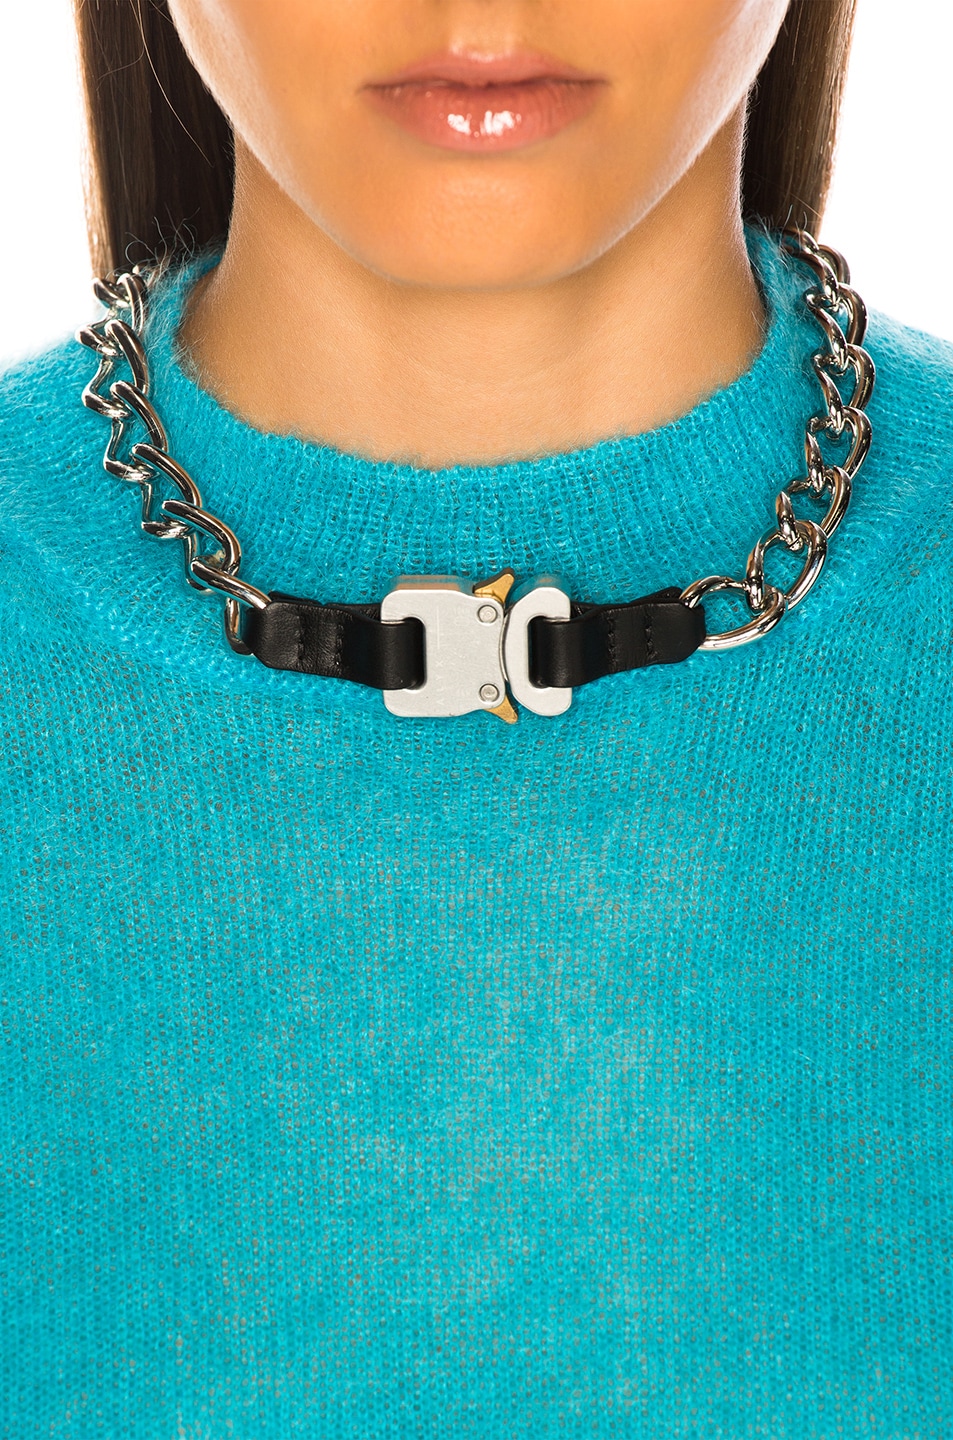 1017 ALYX 9SM Chainlink Necklace in Silver | FWRD